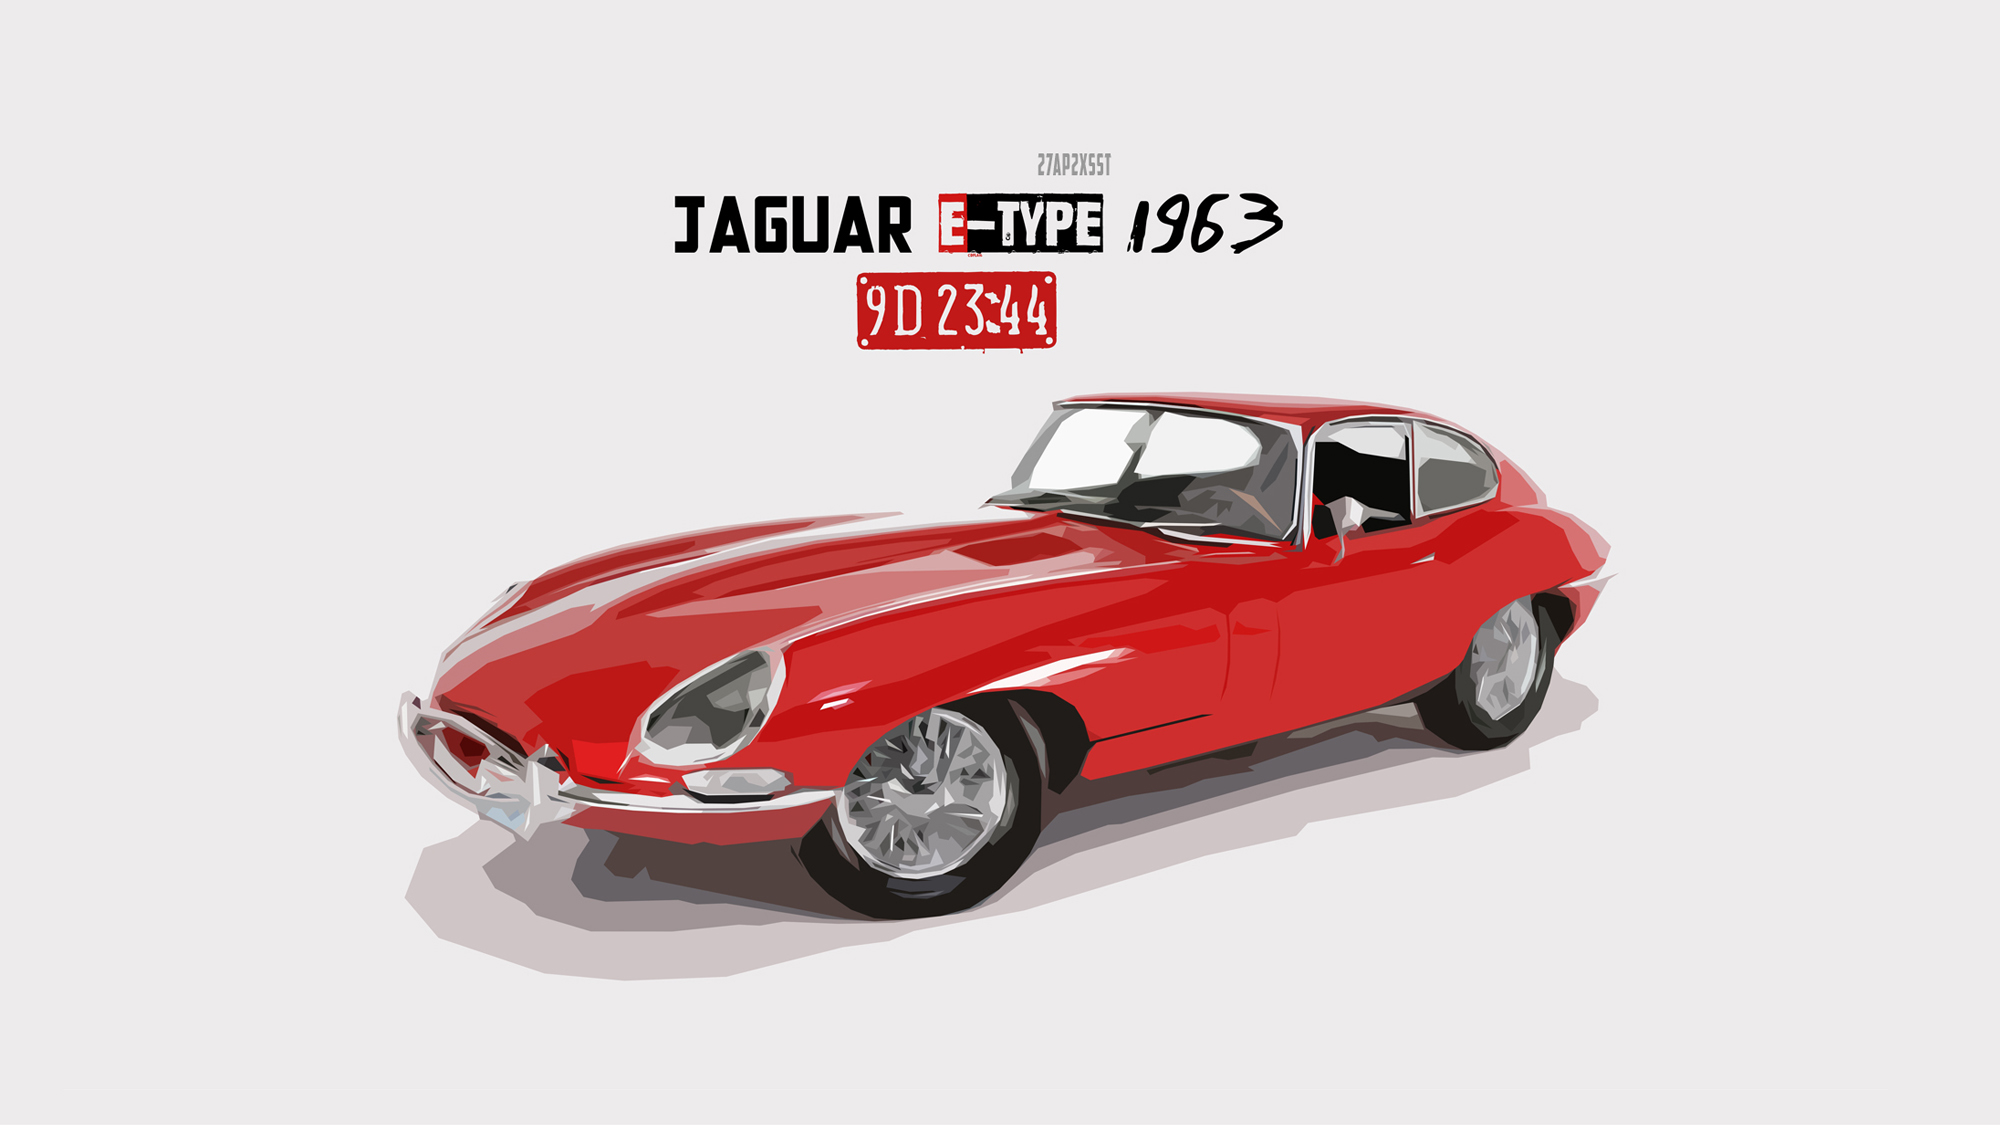 Artistic Car Jaguar Cars Jaguar E Type Red Car Retro Vintage 2000x1125